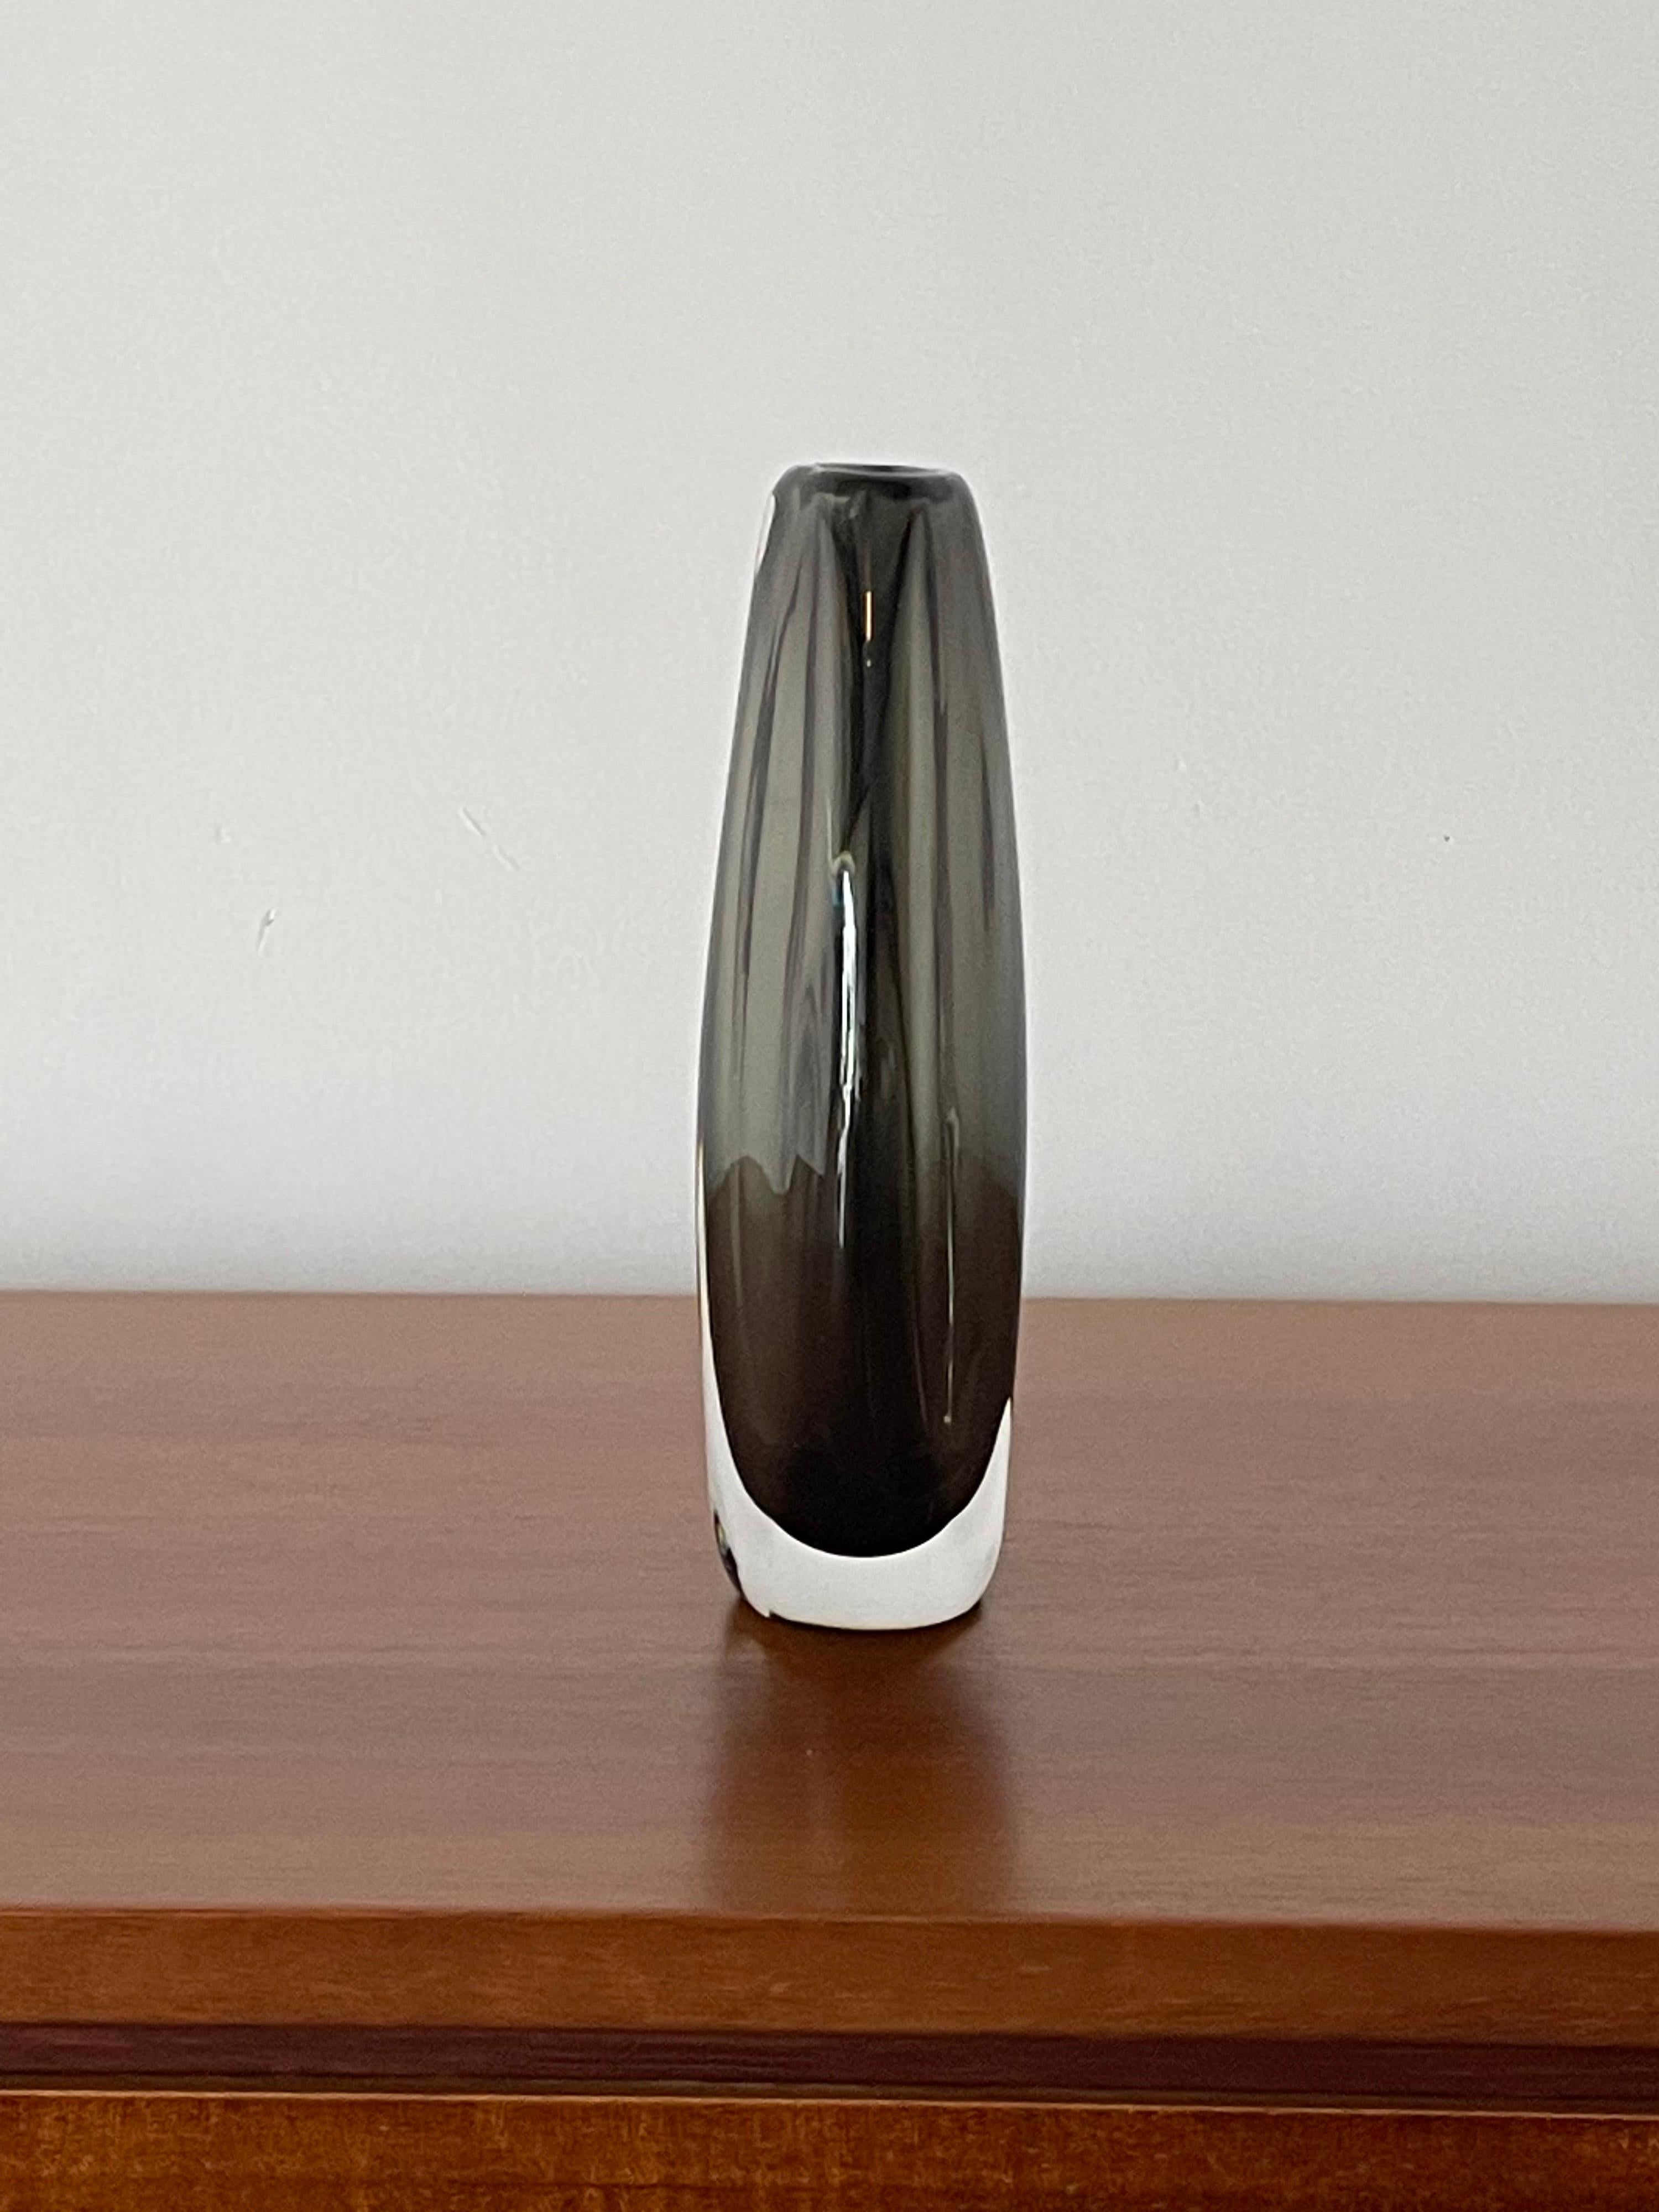 Elegant glass vase designed by Nils Landberg for Orrefors executed in 